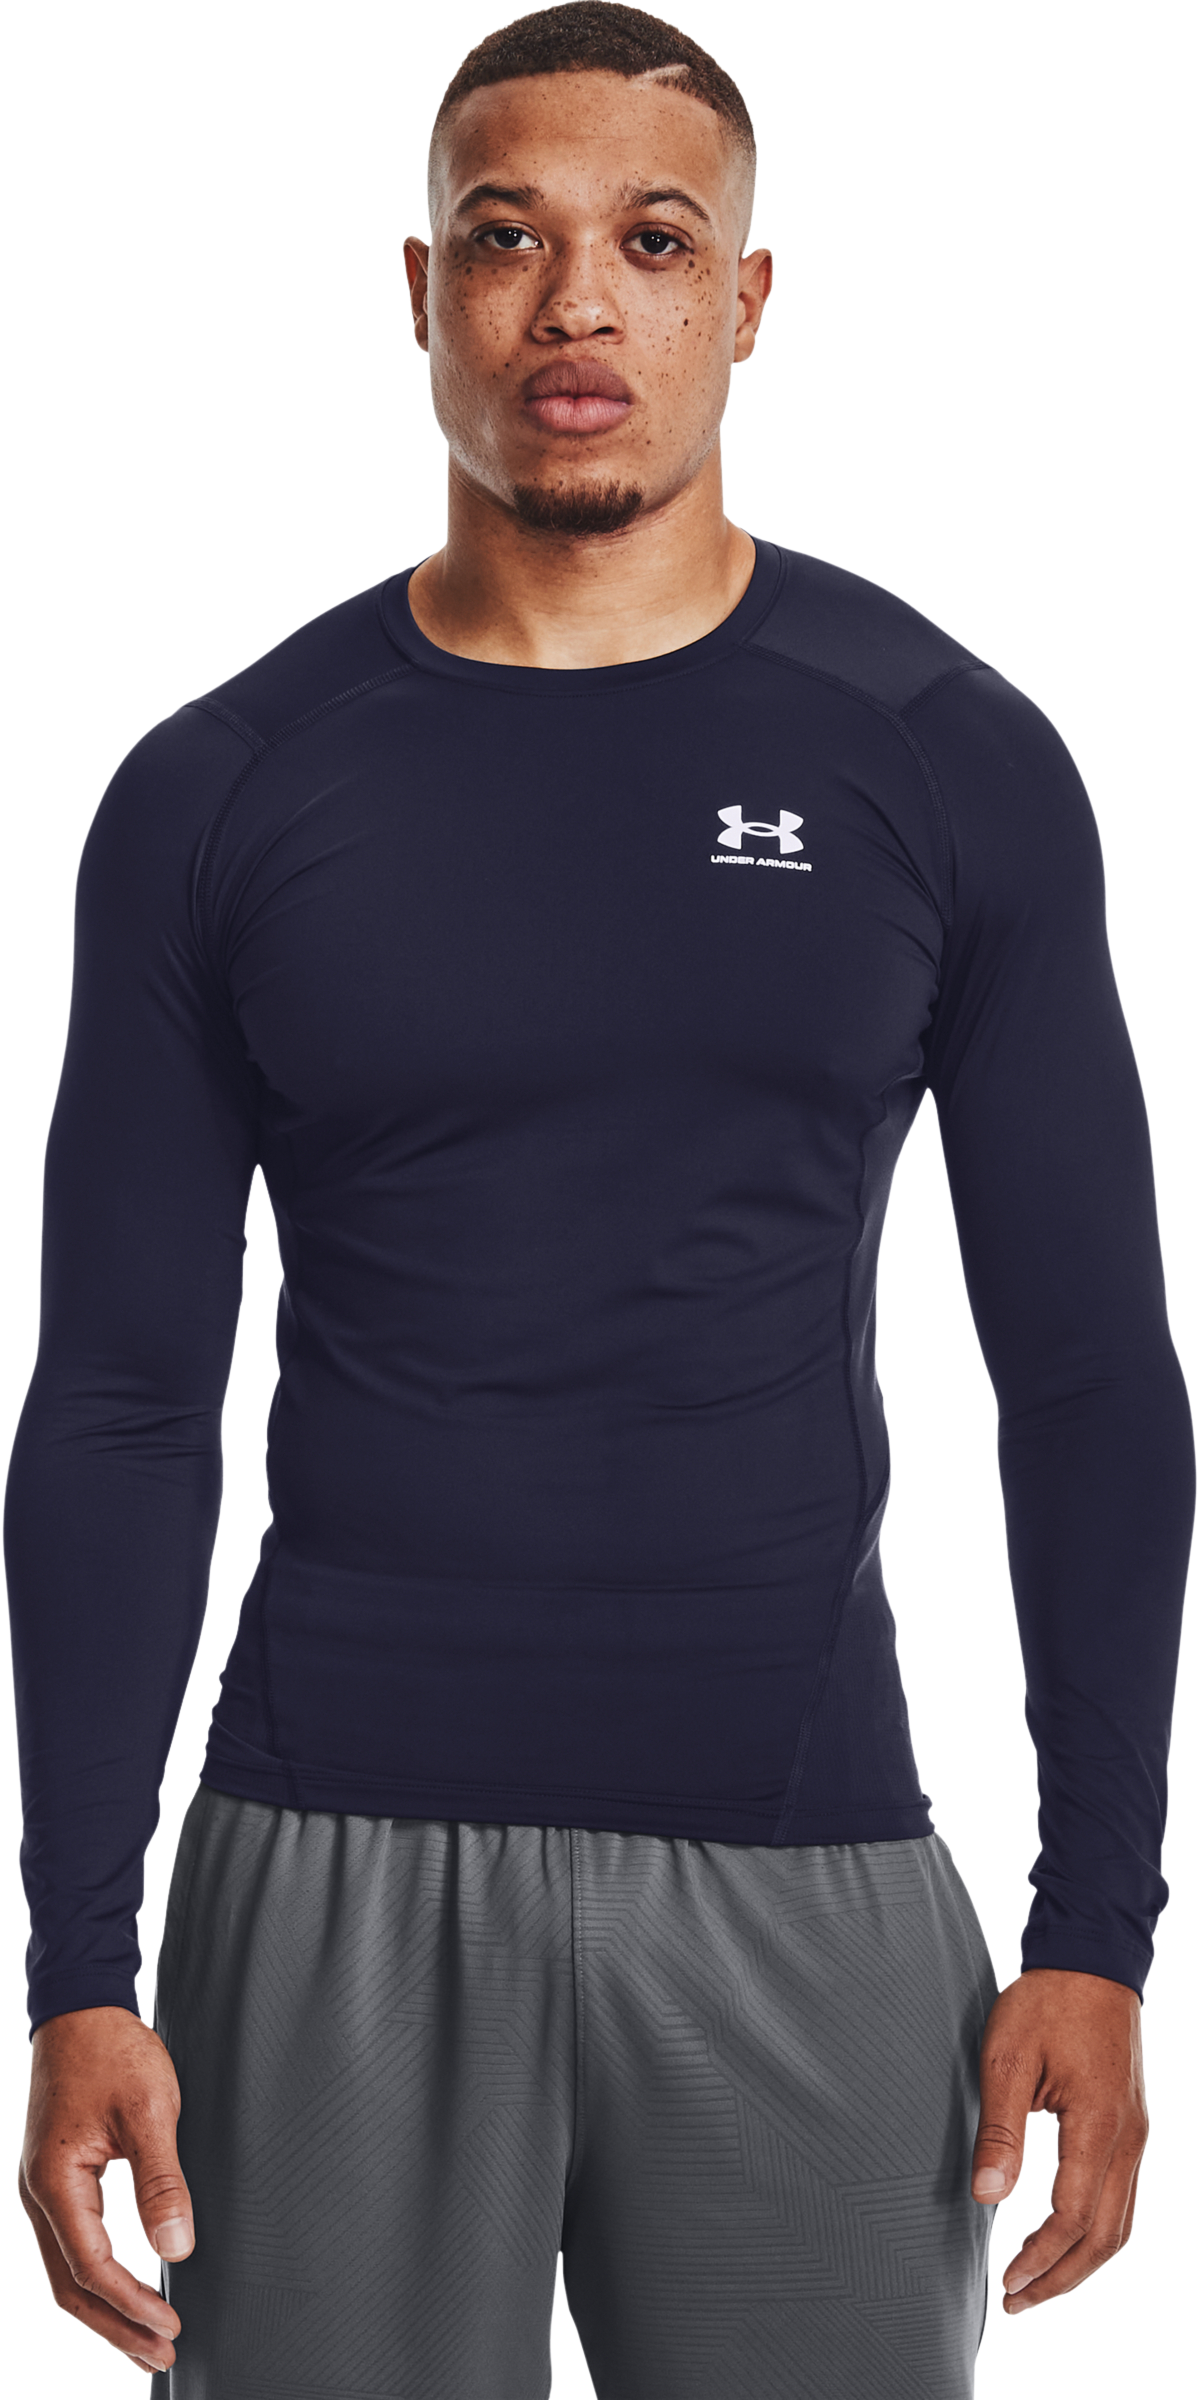 Under Armour Men's HeatGear Long Sleeve Compression Shirt-1361524